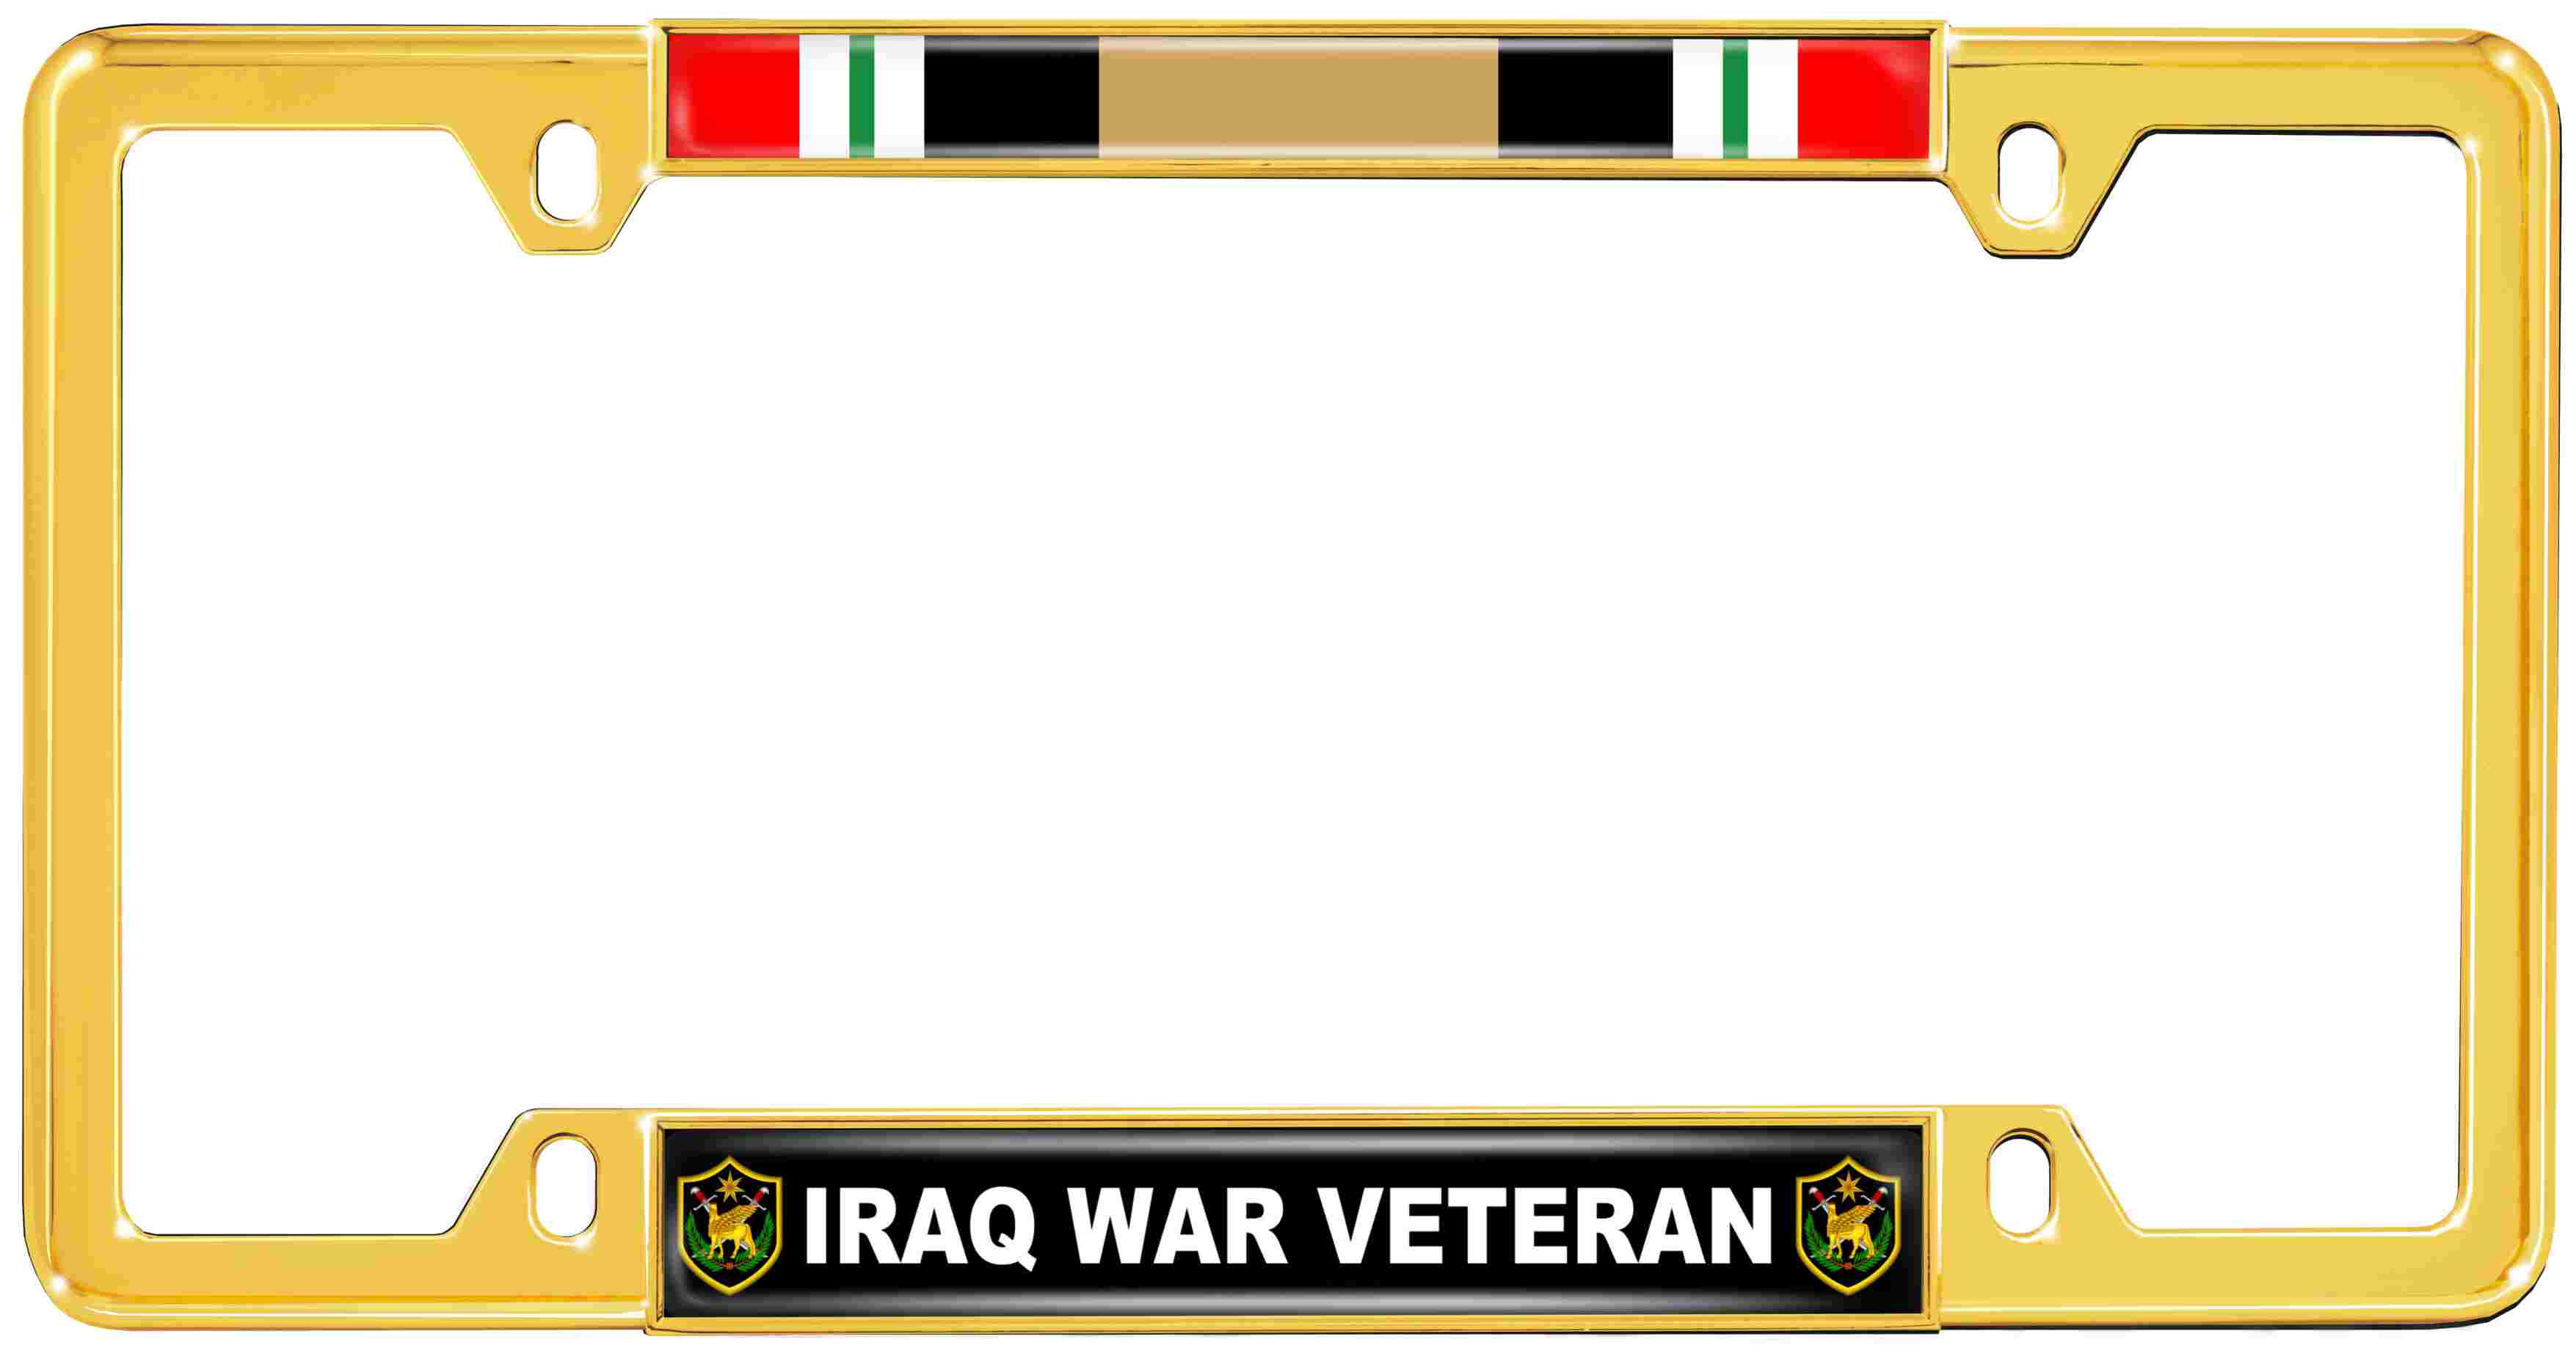 Iraq War Veteran - Car Metal License Plate Frame